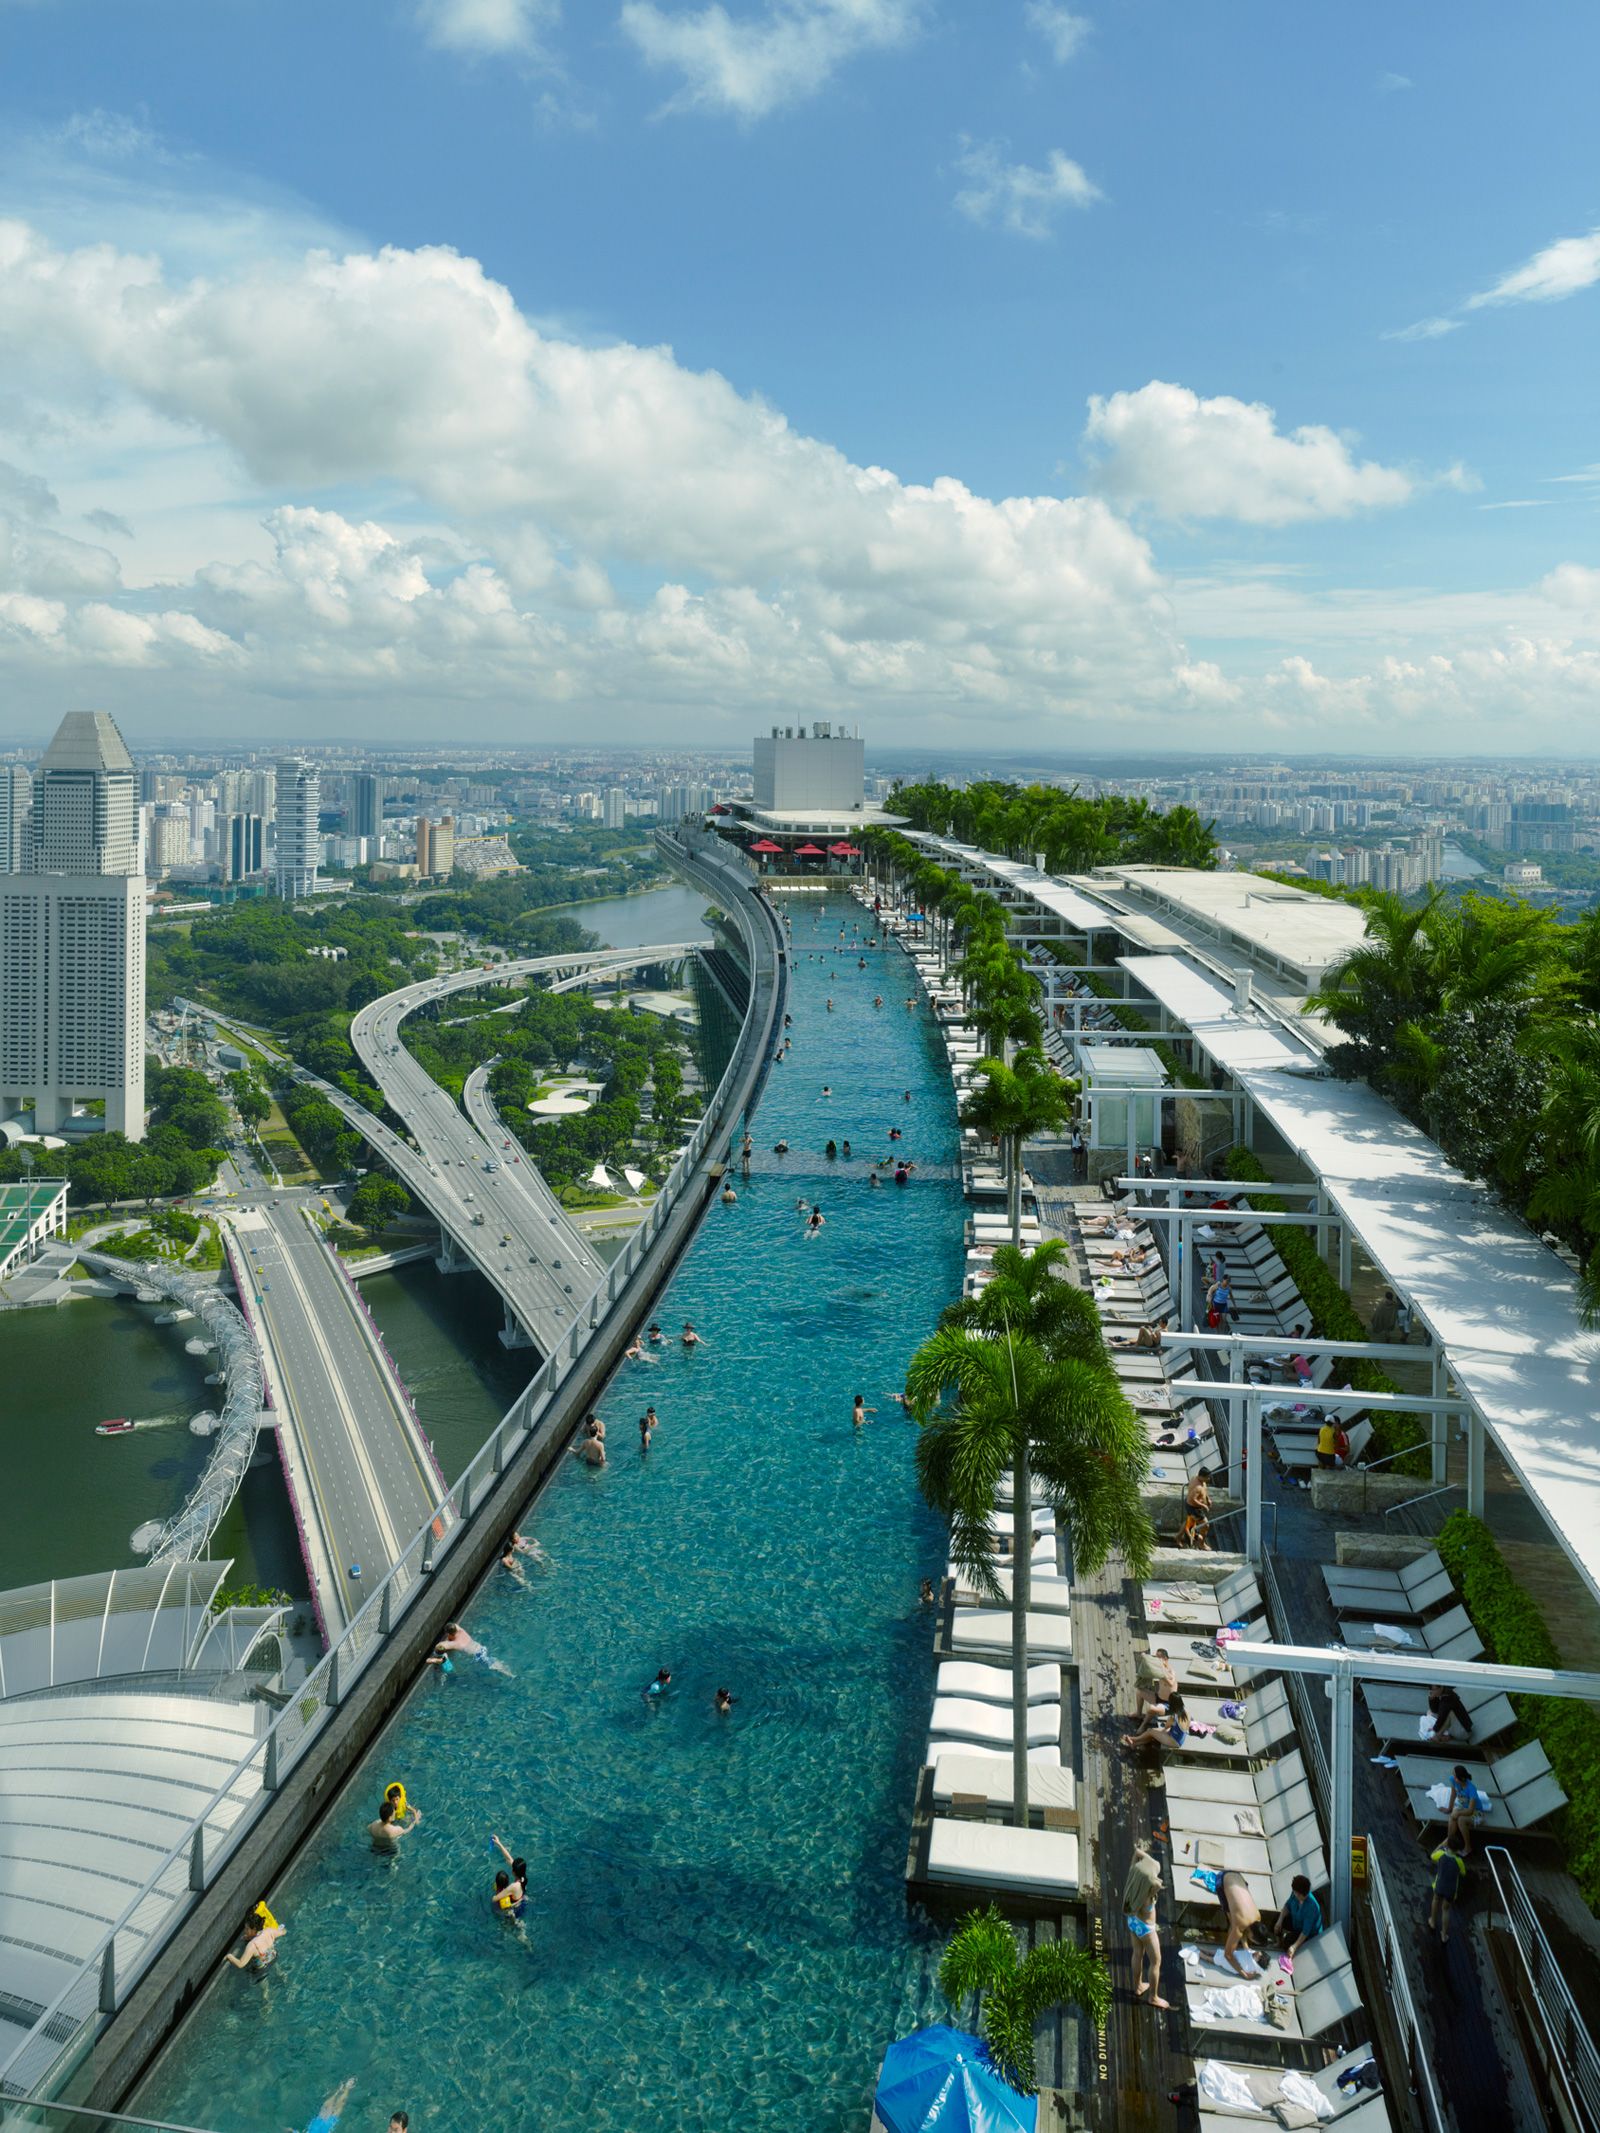 Moshie Safdie on Singapore architecture